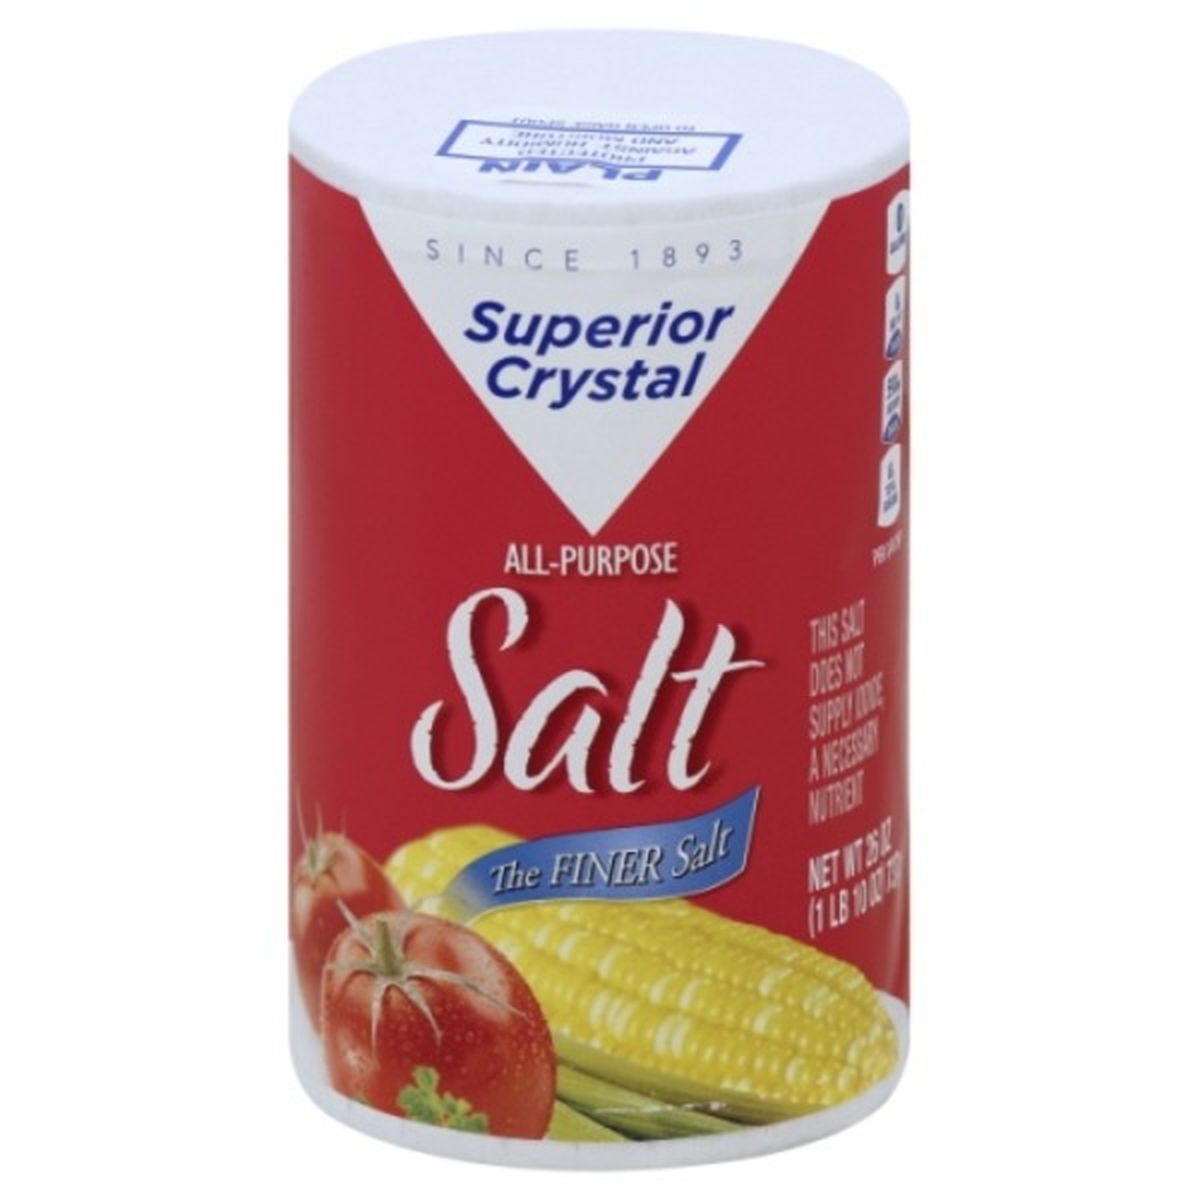 Calories in Superior Crystal Salt, All-Purpose